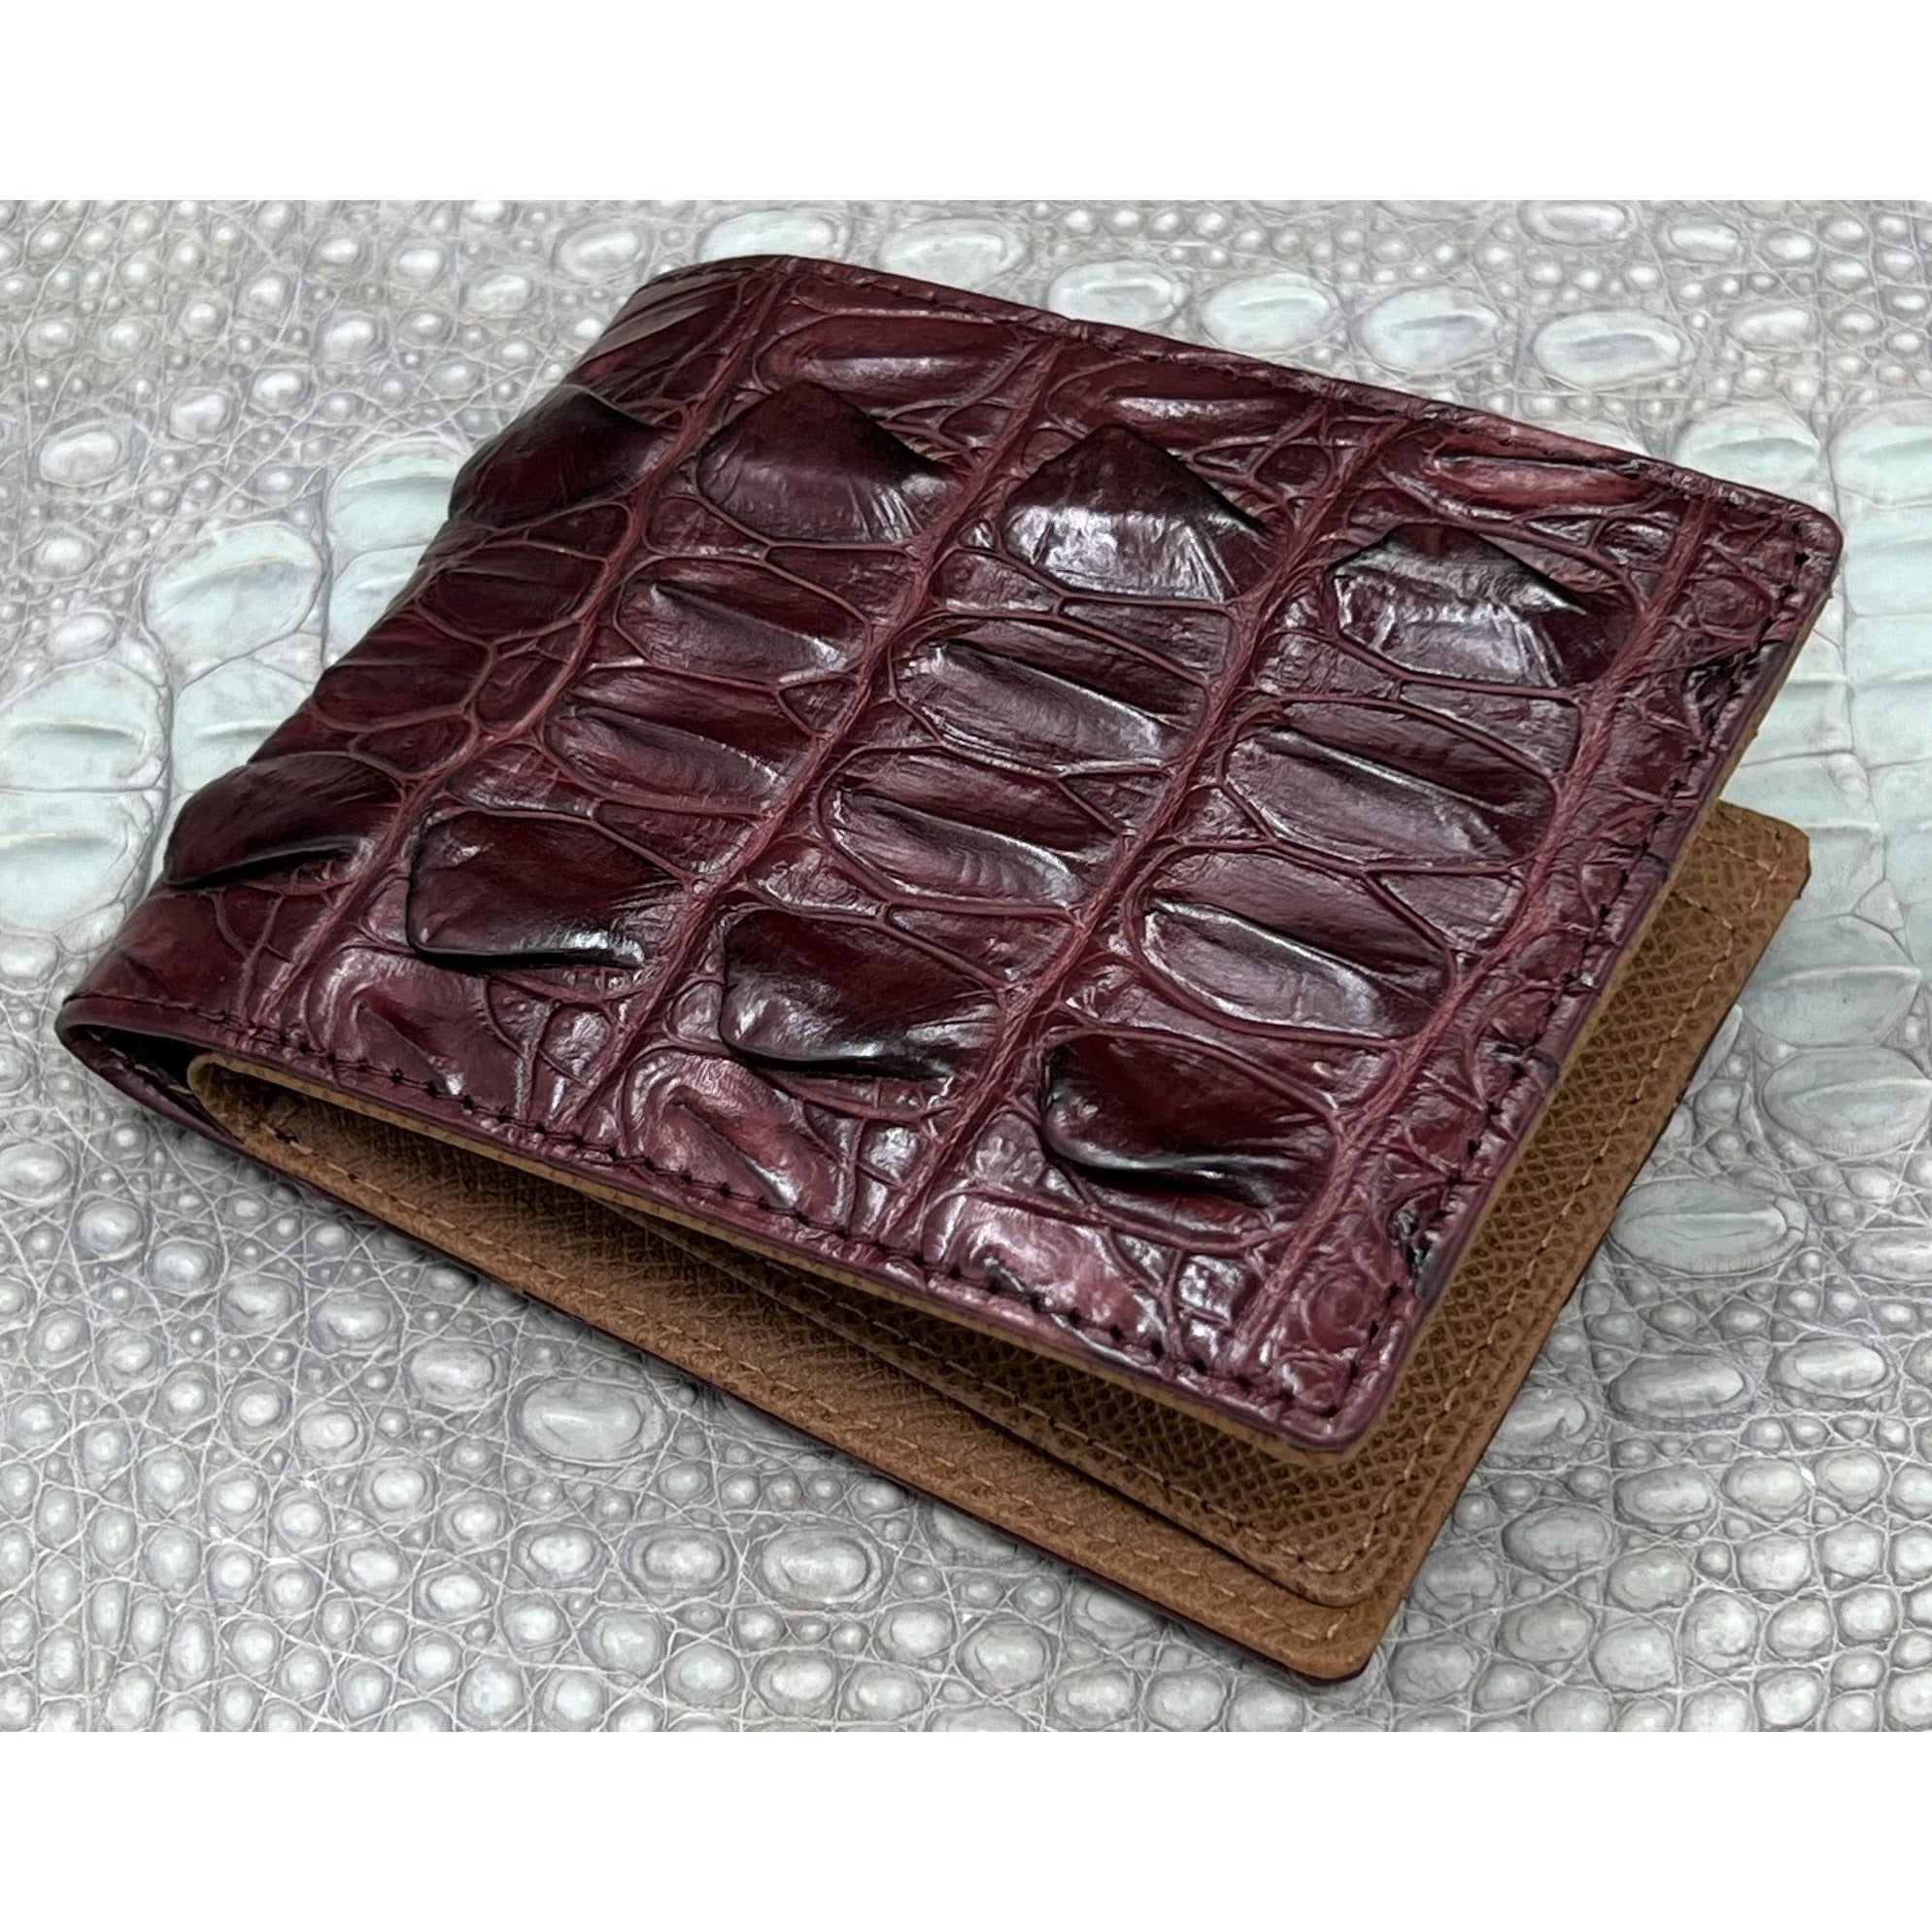 Red Burgundy Alligator Skin Bifold Wallet For Men | Handmade Crocodile Leather Wallet RFID Blocking | VL5521 - Vinacreations